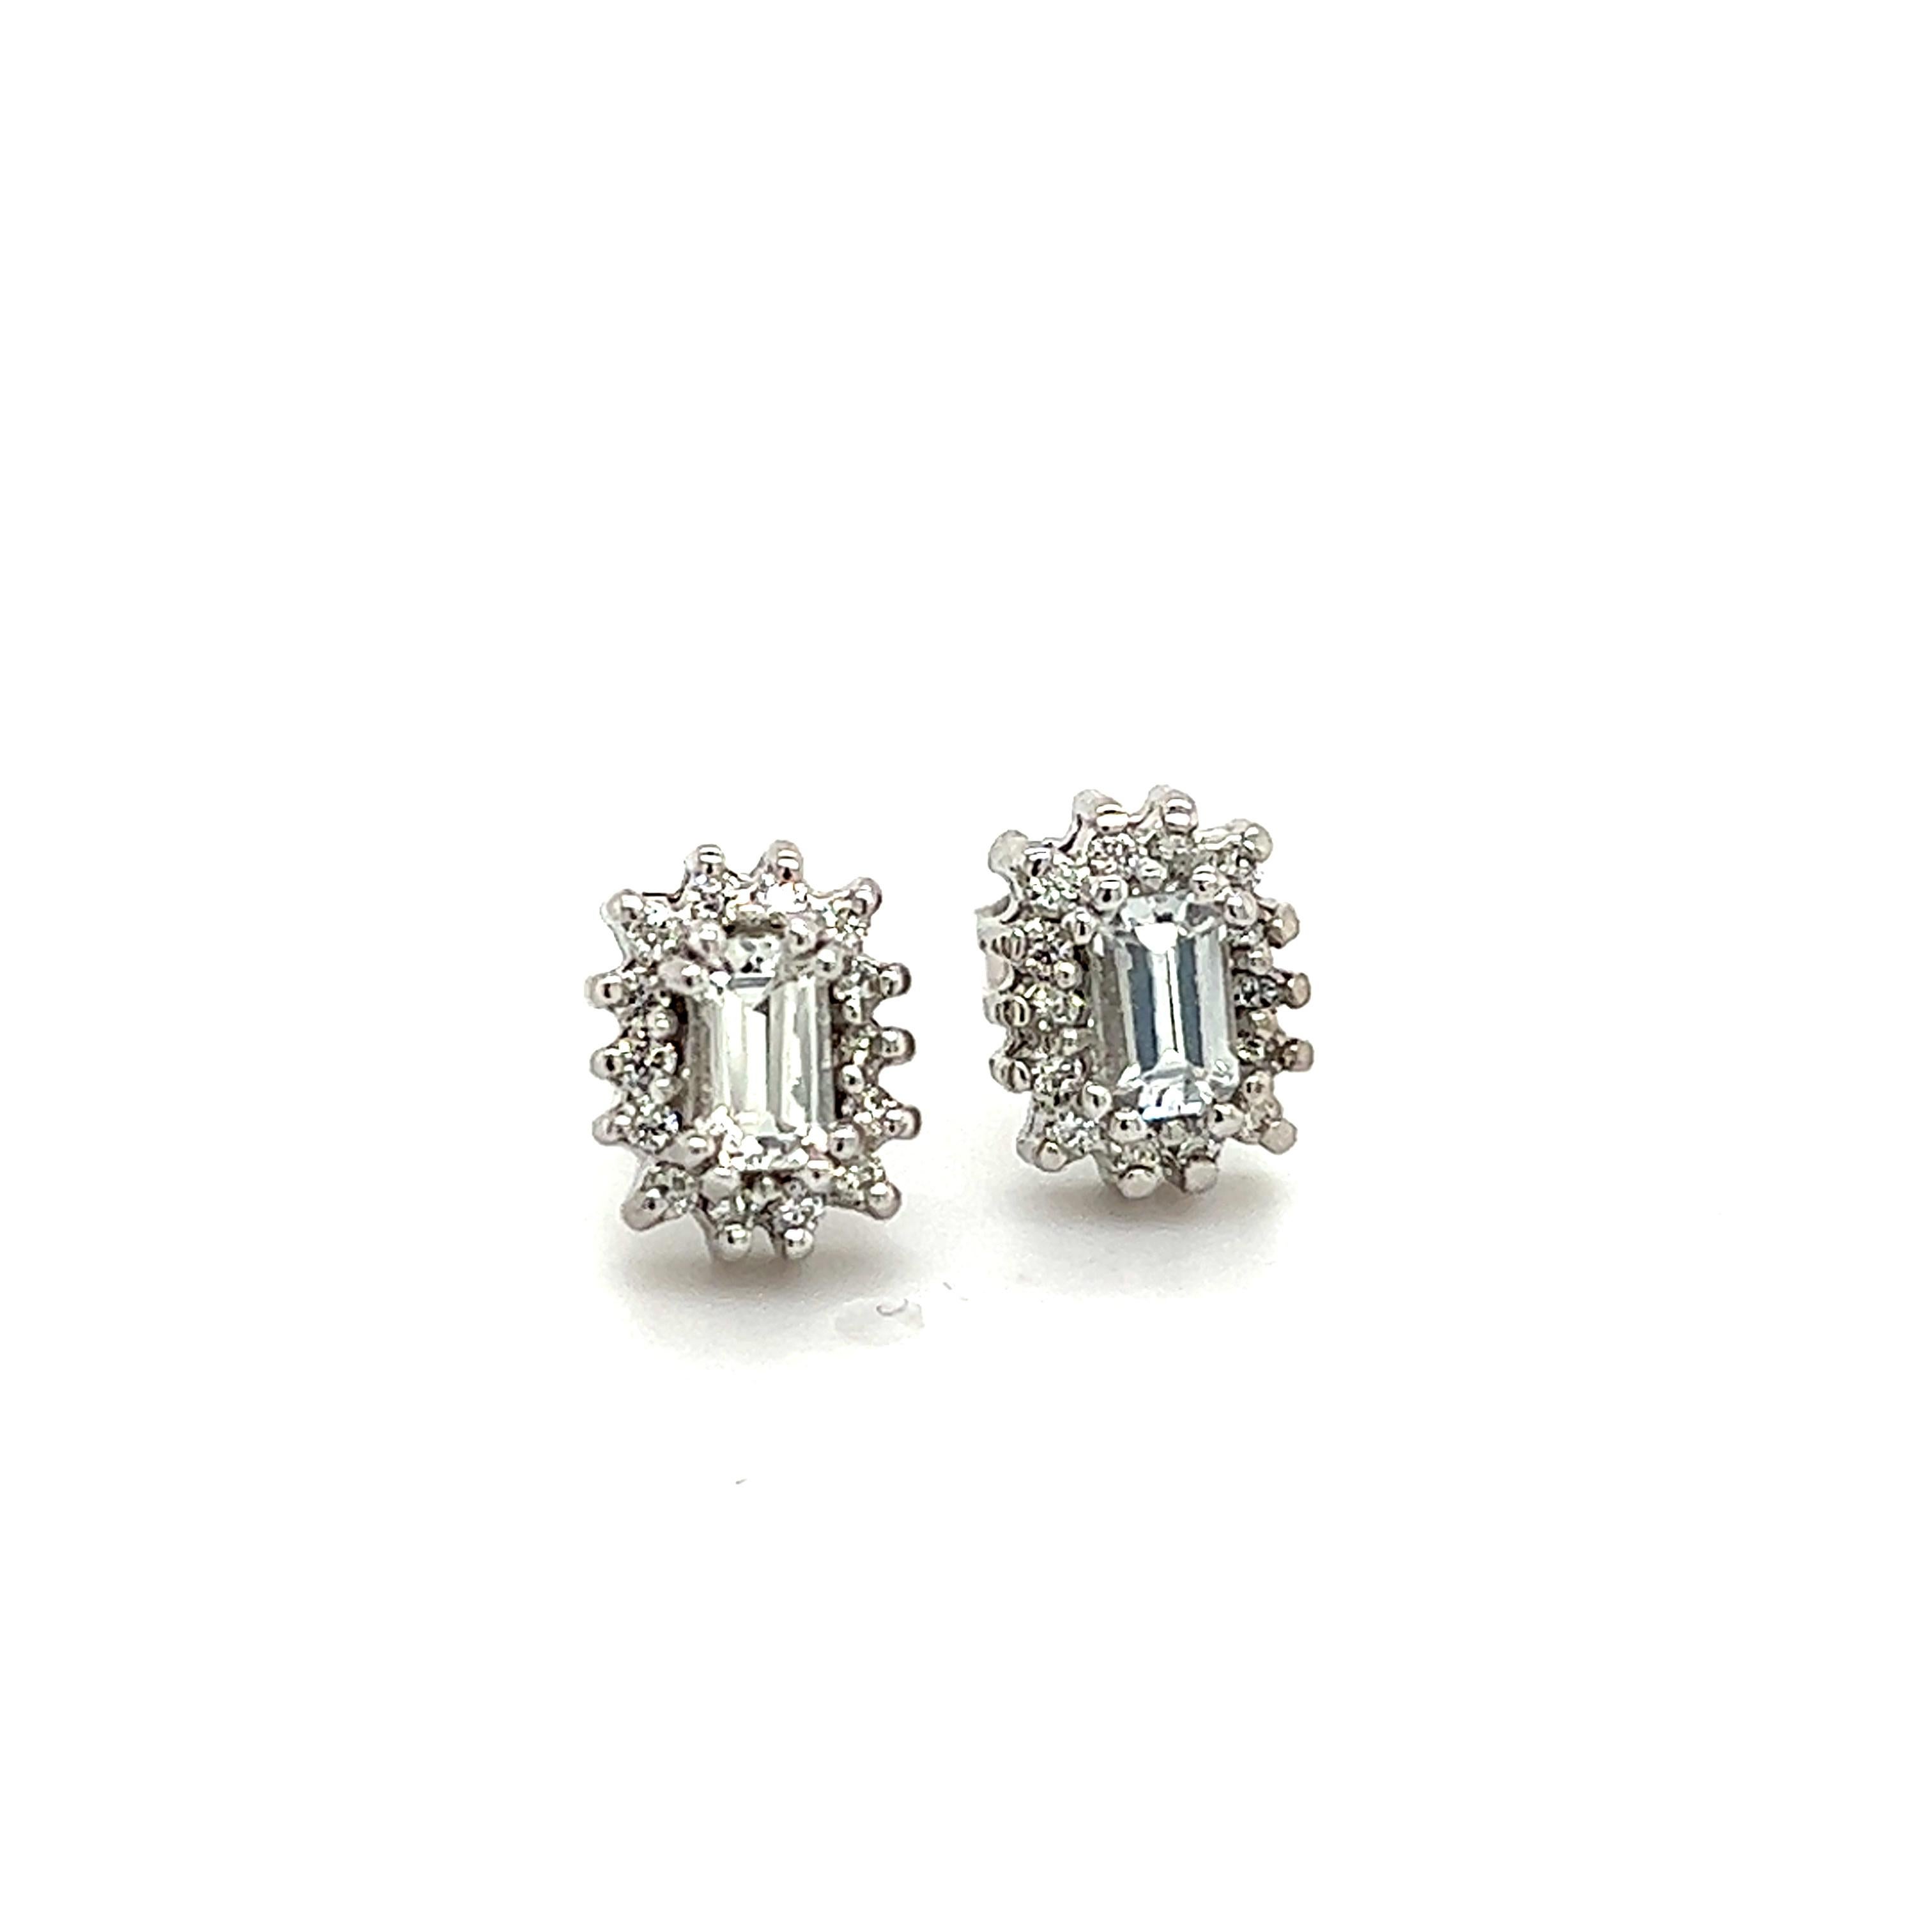 Natural Sapphire Diamond Stud Earrings 14k W Gold 0.94 TCW Certified For Sale 5